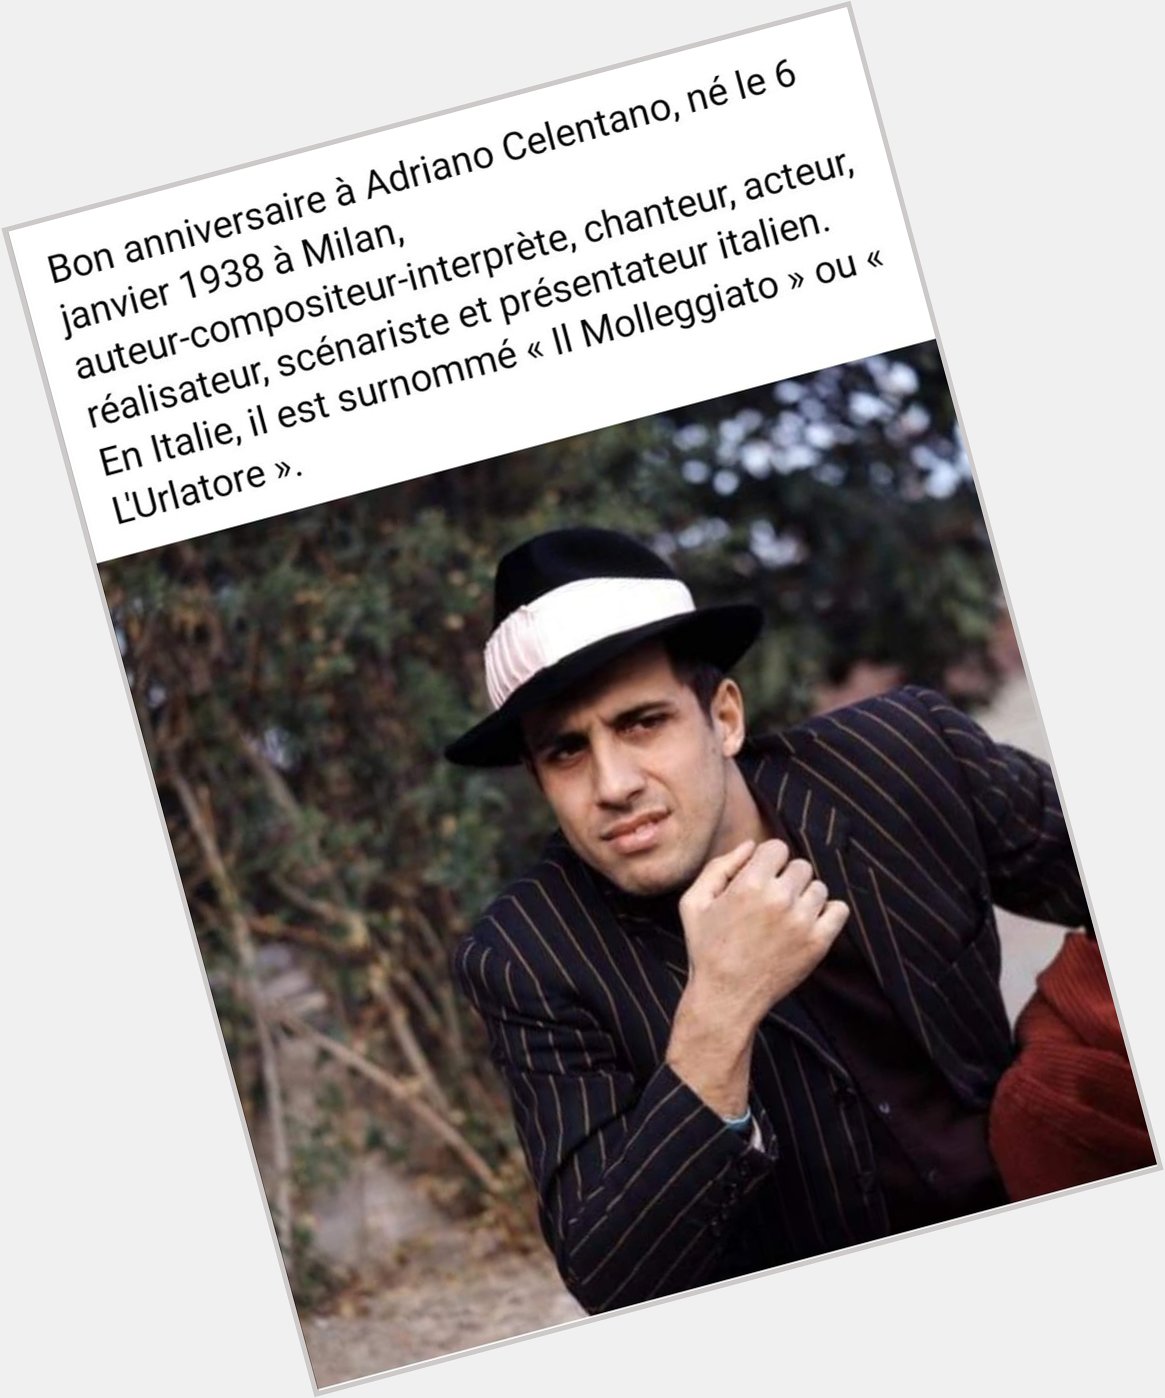 Happy birthday Adriano Celentano  